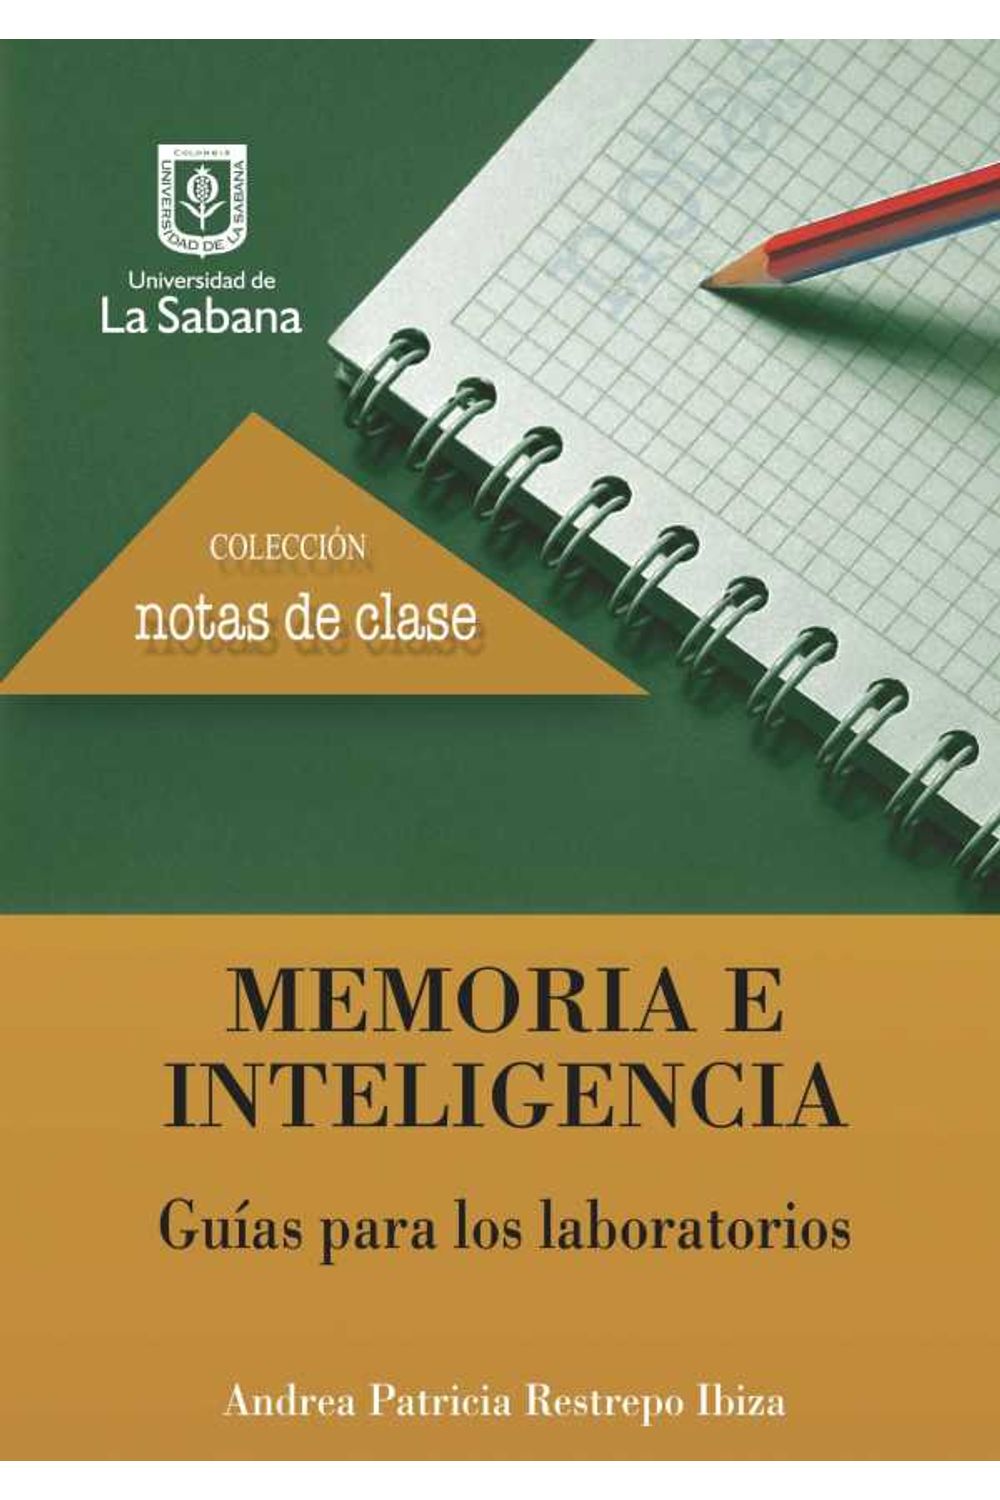 bw-memoria-e-inteligencia-guiacuteas-para-los-laboratorios-u-de-la-sabana-9789581203208